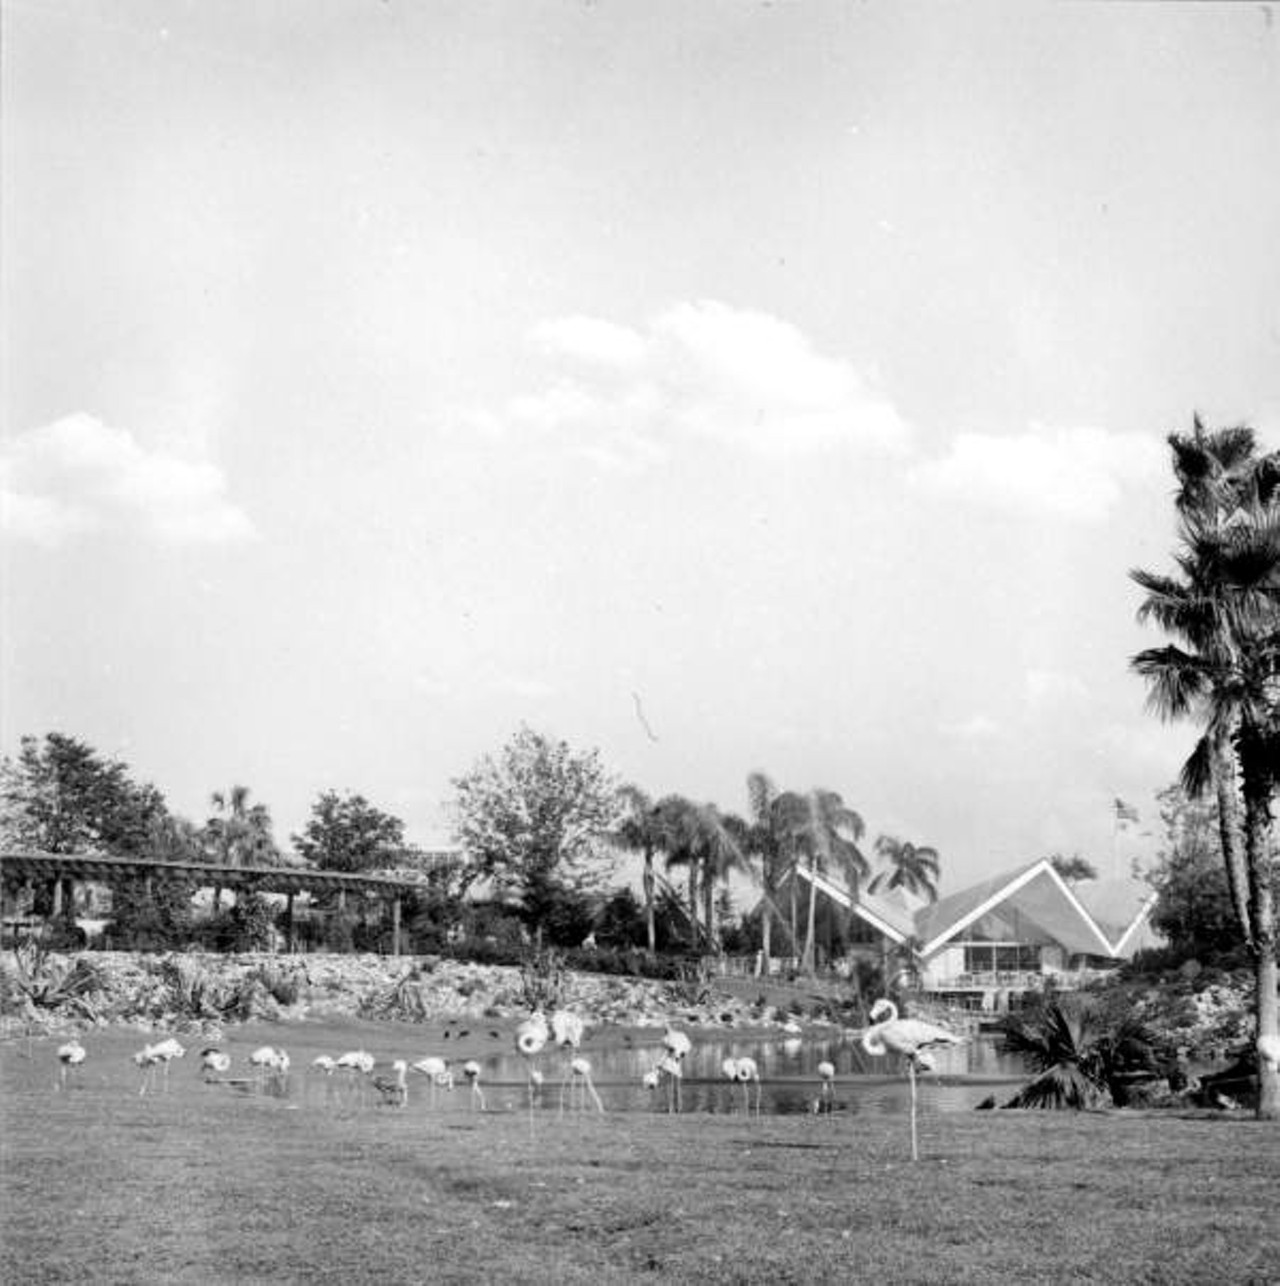 View of flamingos at Busch Gardens. 1960.